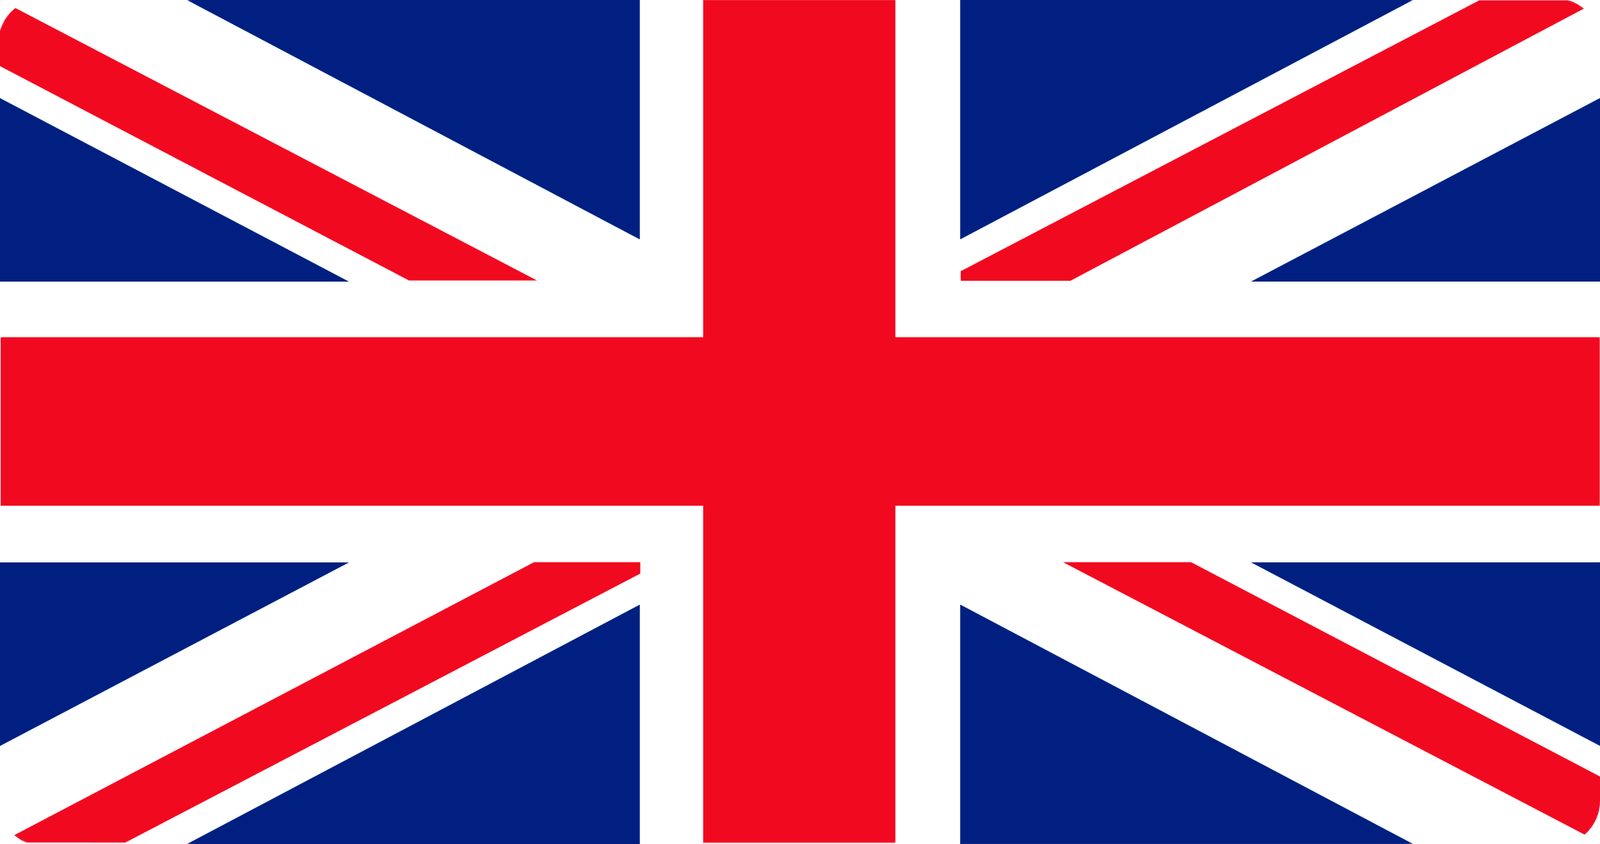 Bandeira-britanica-min.png